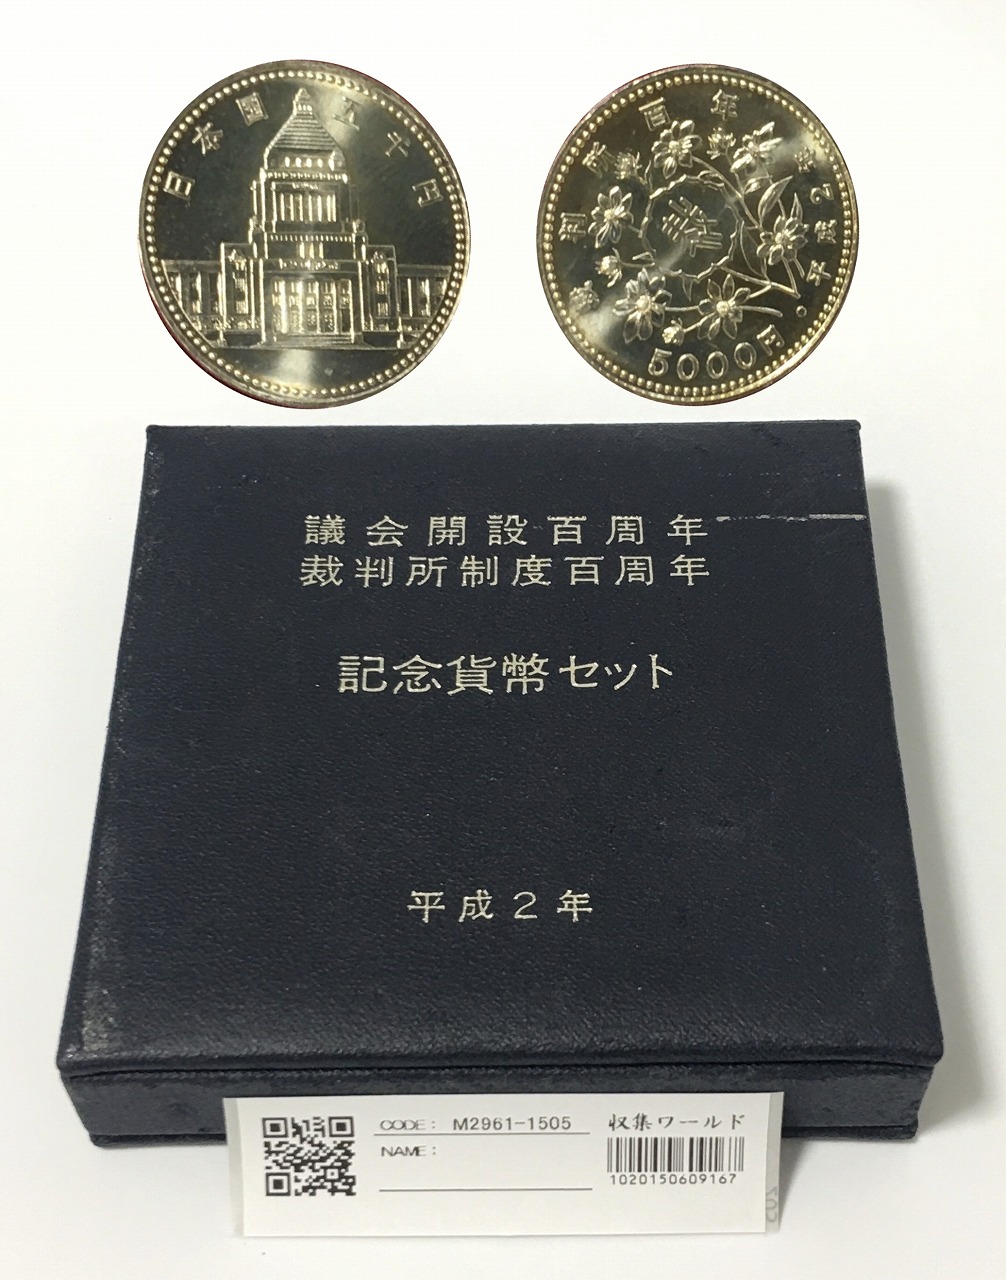 議会開設100周年記念と裁判所制度100周年記念5000円銀貨セット